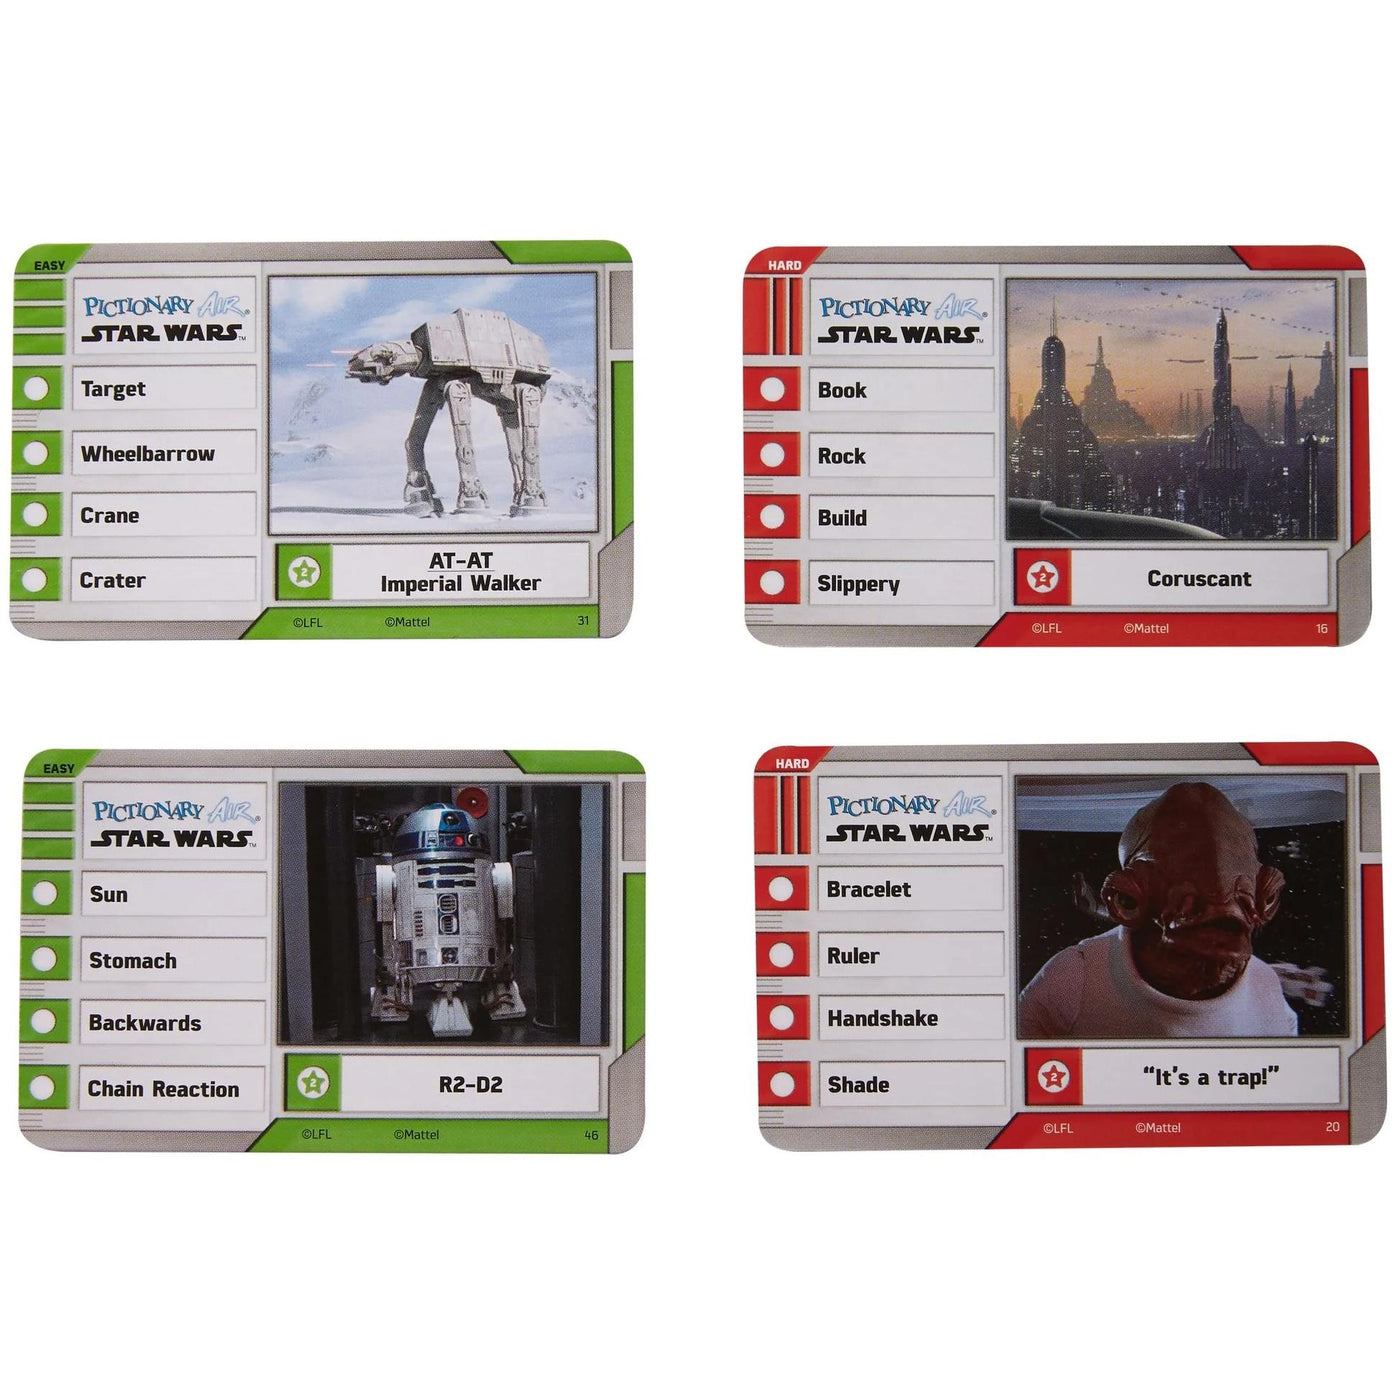 Pictionary Air Star Wars-Board Games-Mattel-Yes Bebe